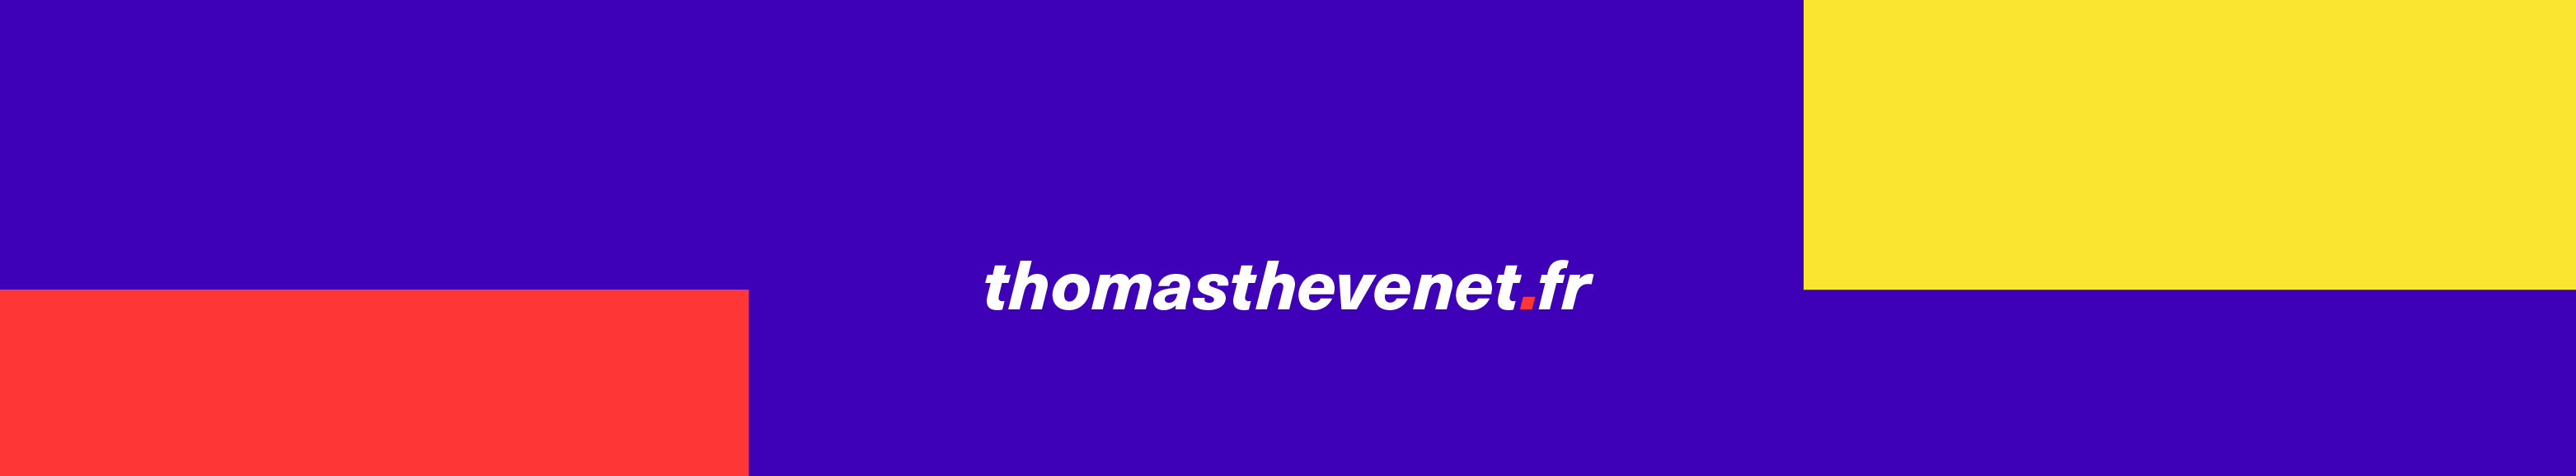 Thomas Thevenet's profile banner